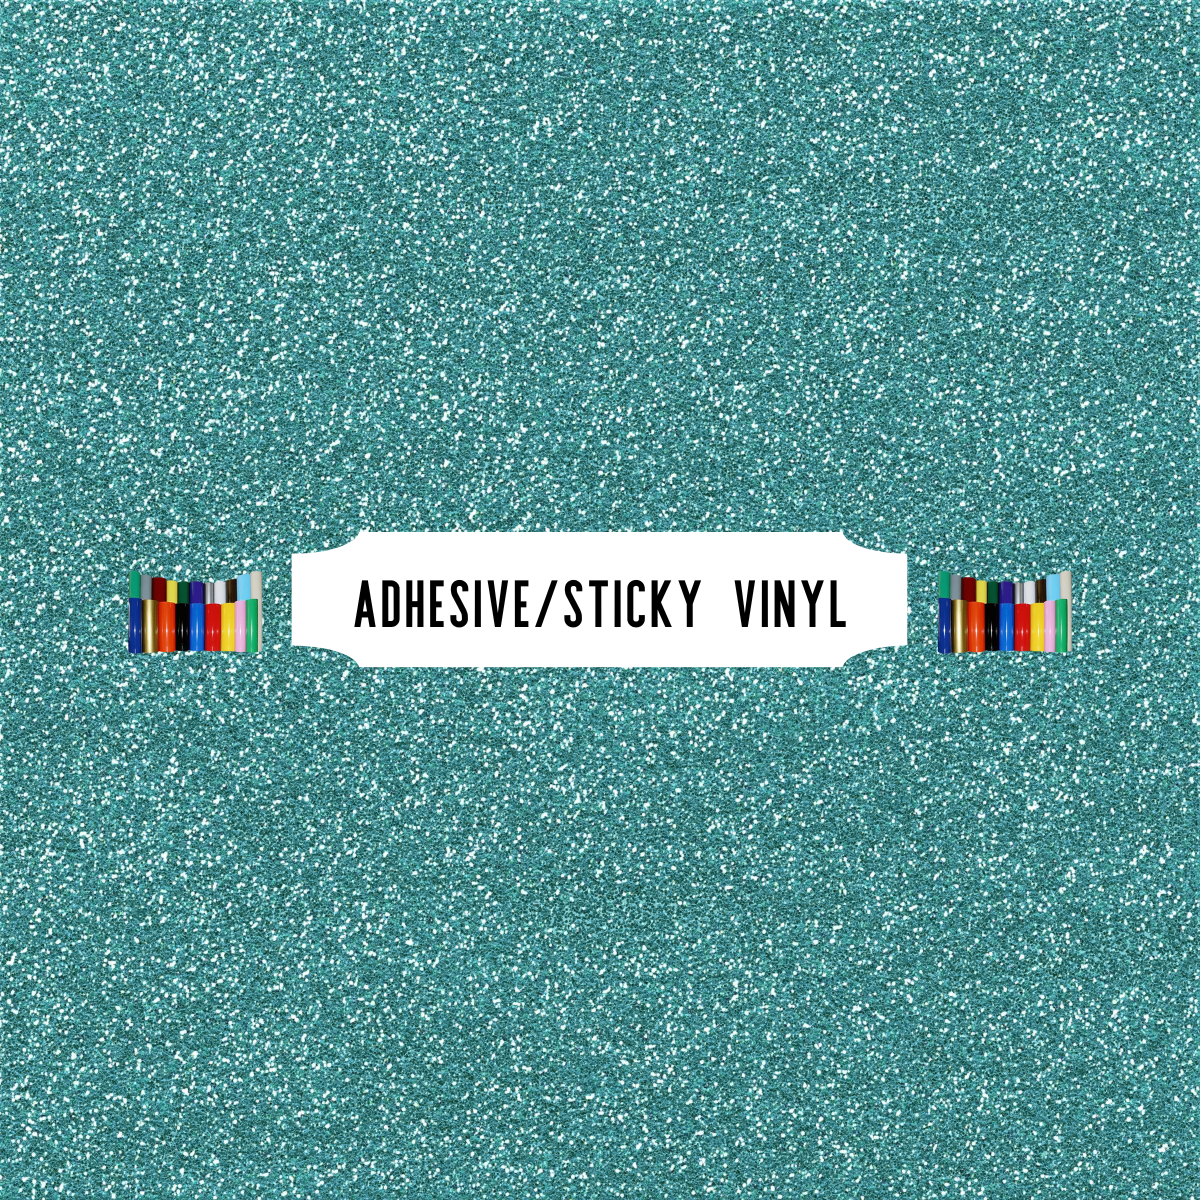 Adhesive/Sticky Vinyl